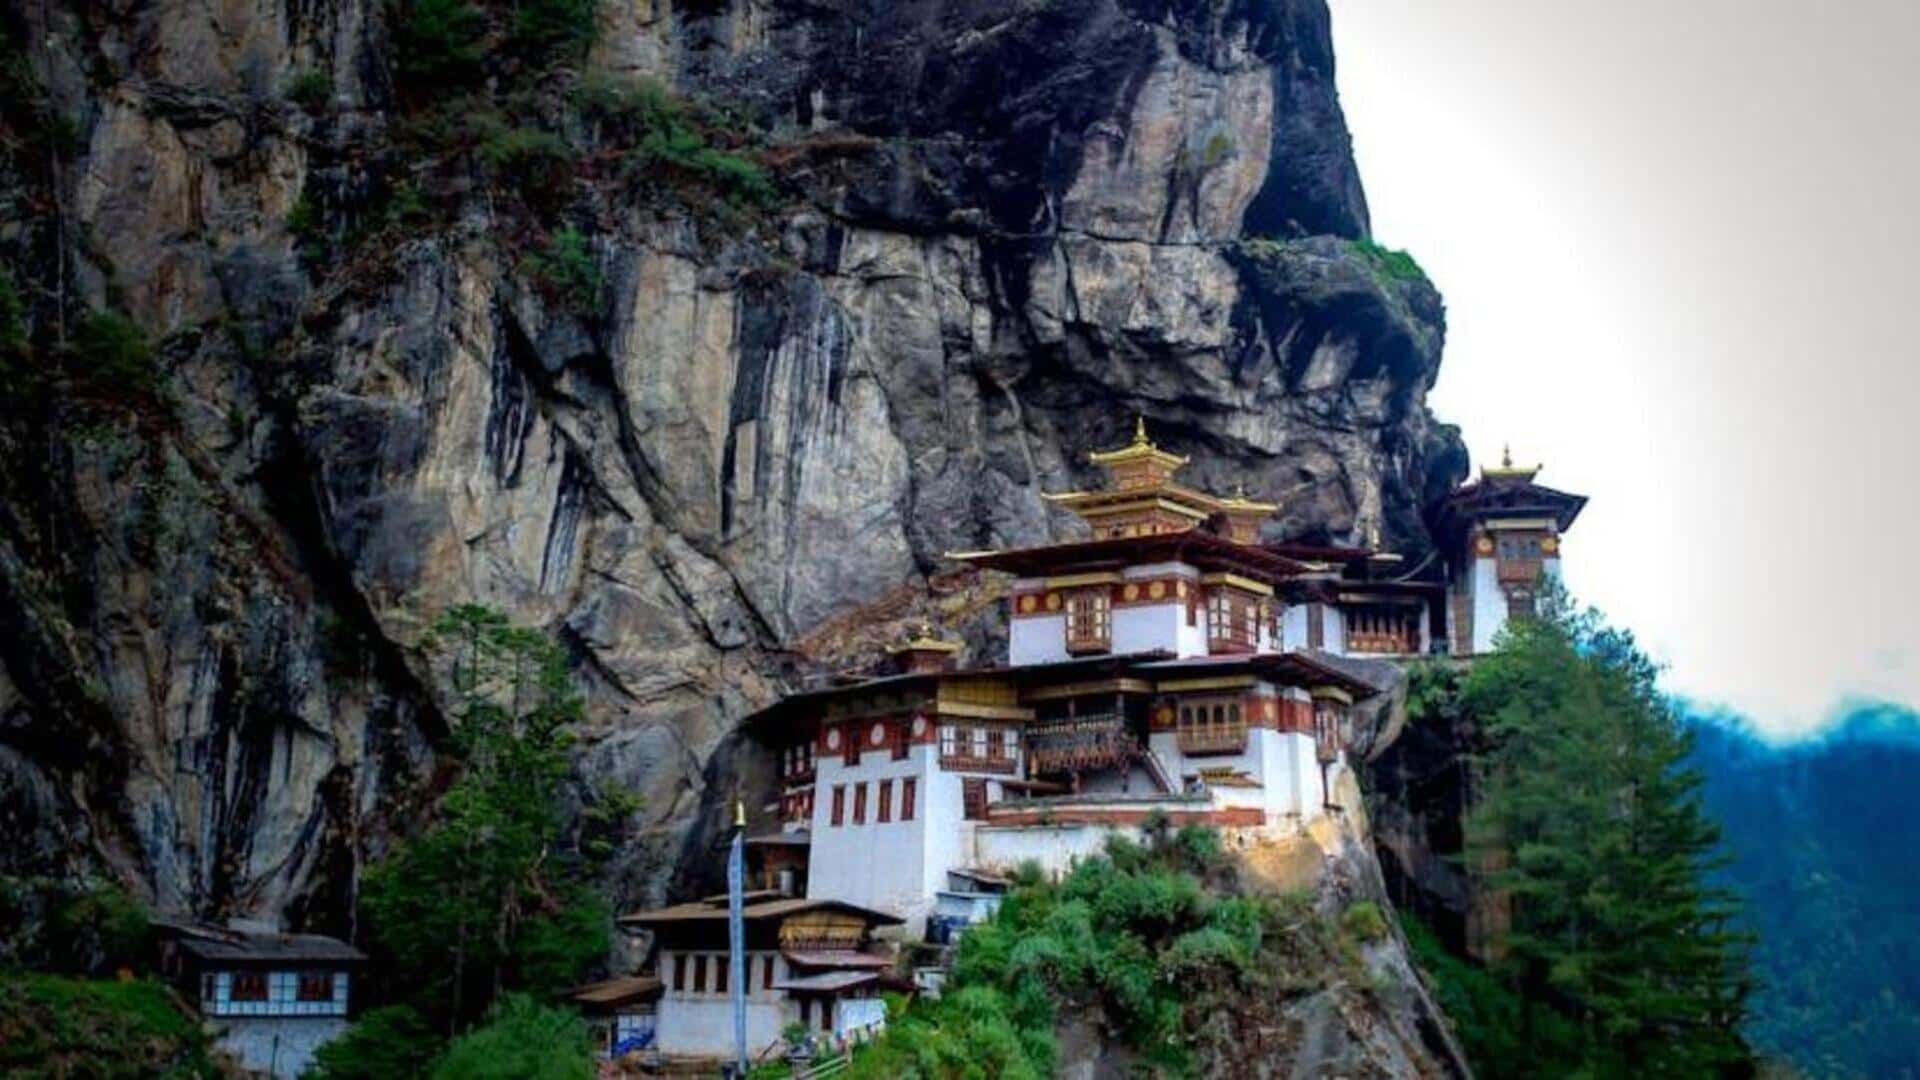 Mulailah perjalanan di jalur pegunungan suci Bhutan untuk mendapatkan pengalaman unik 